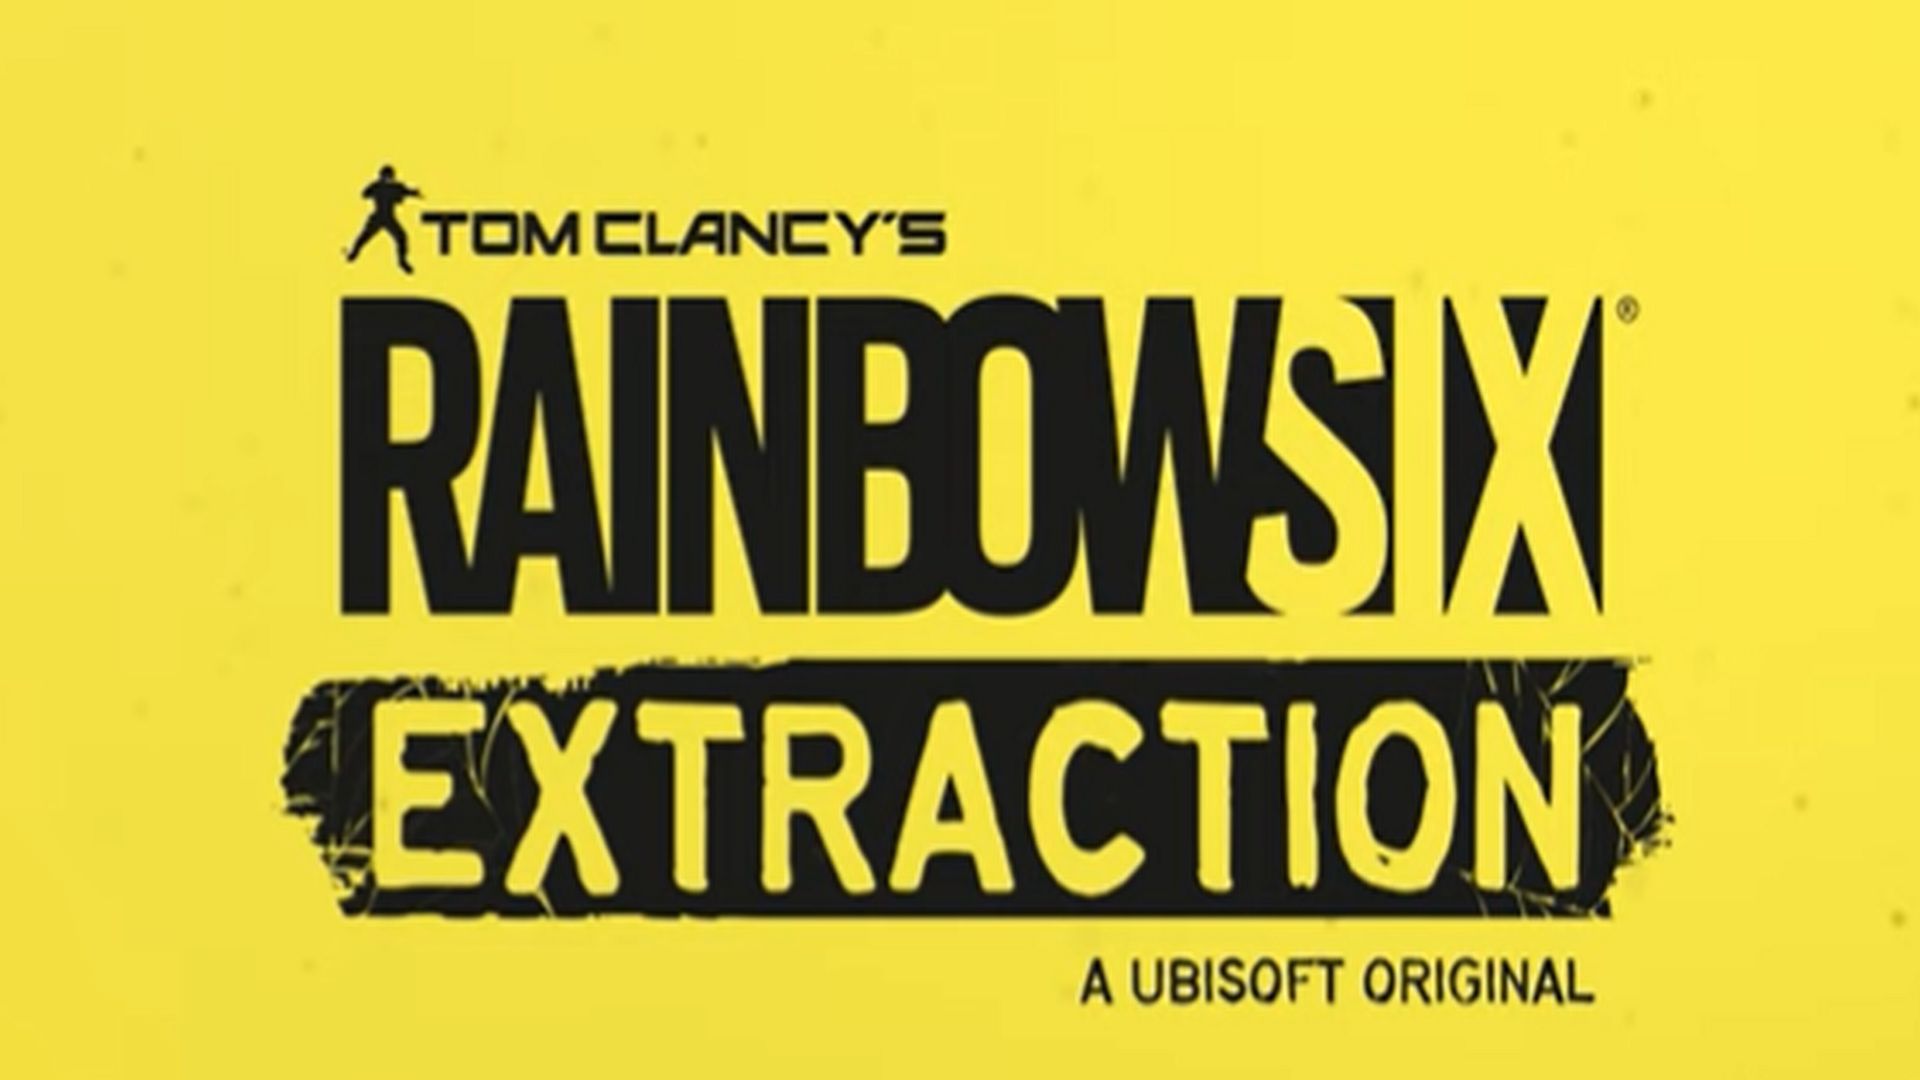 Rainbow Six Extraction is die amptelike naam van Rainbow Six Quarantine